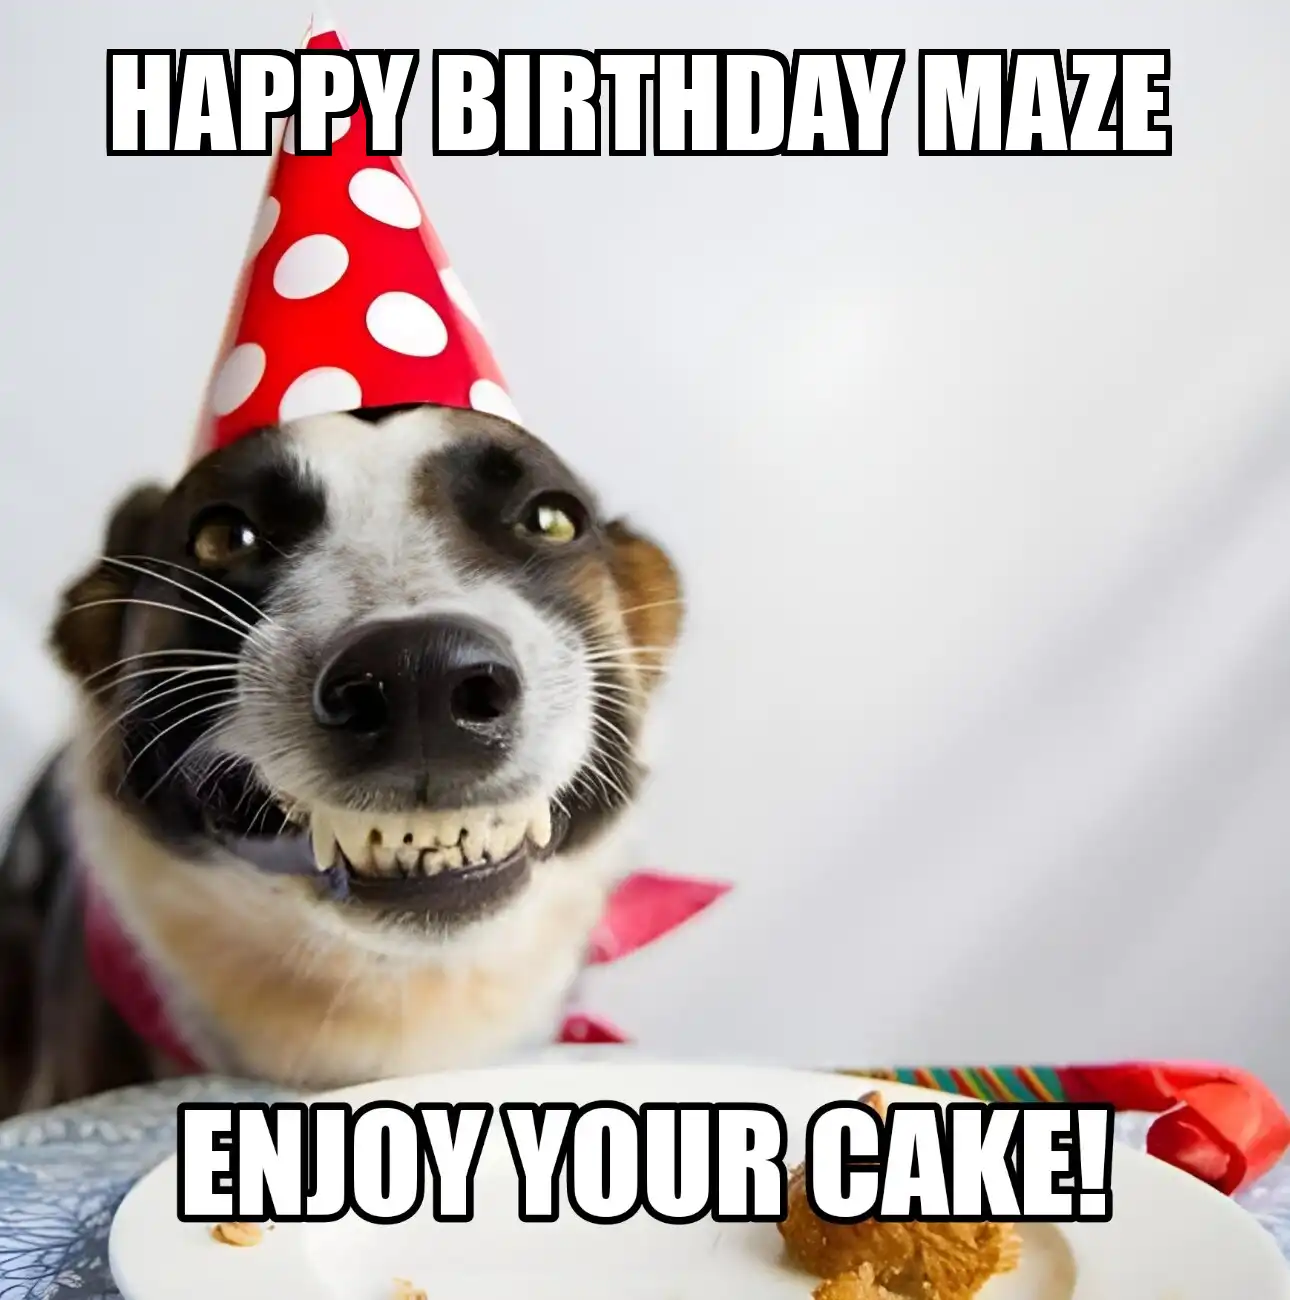 Happy Birthday Maze Enjoy Your Cake Dog Meme